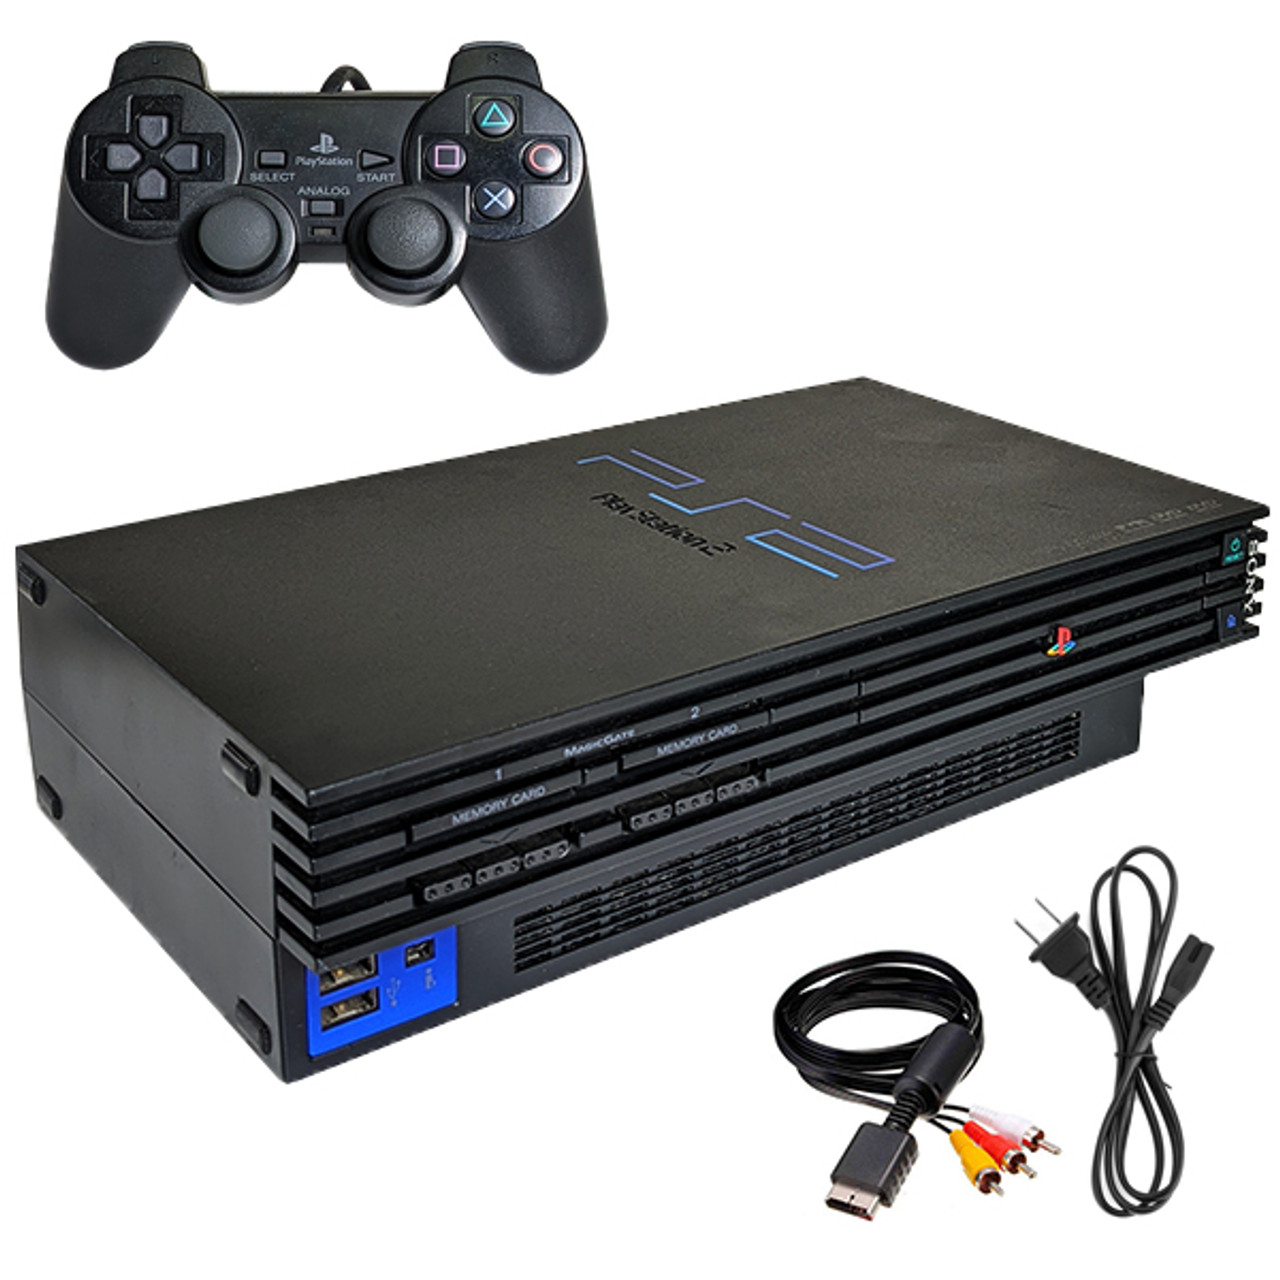 *FAN FAVORITE* PlayStation 2 Black PS2 Player Pak